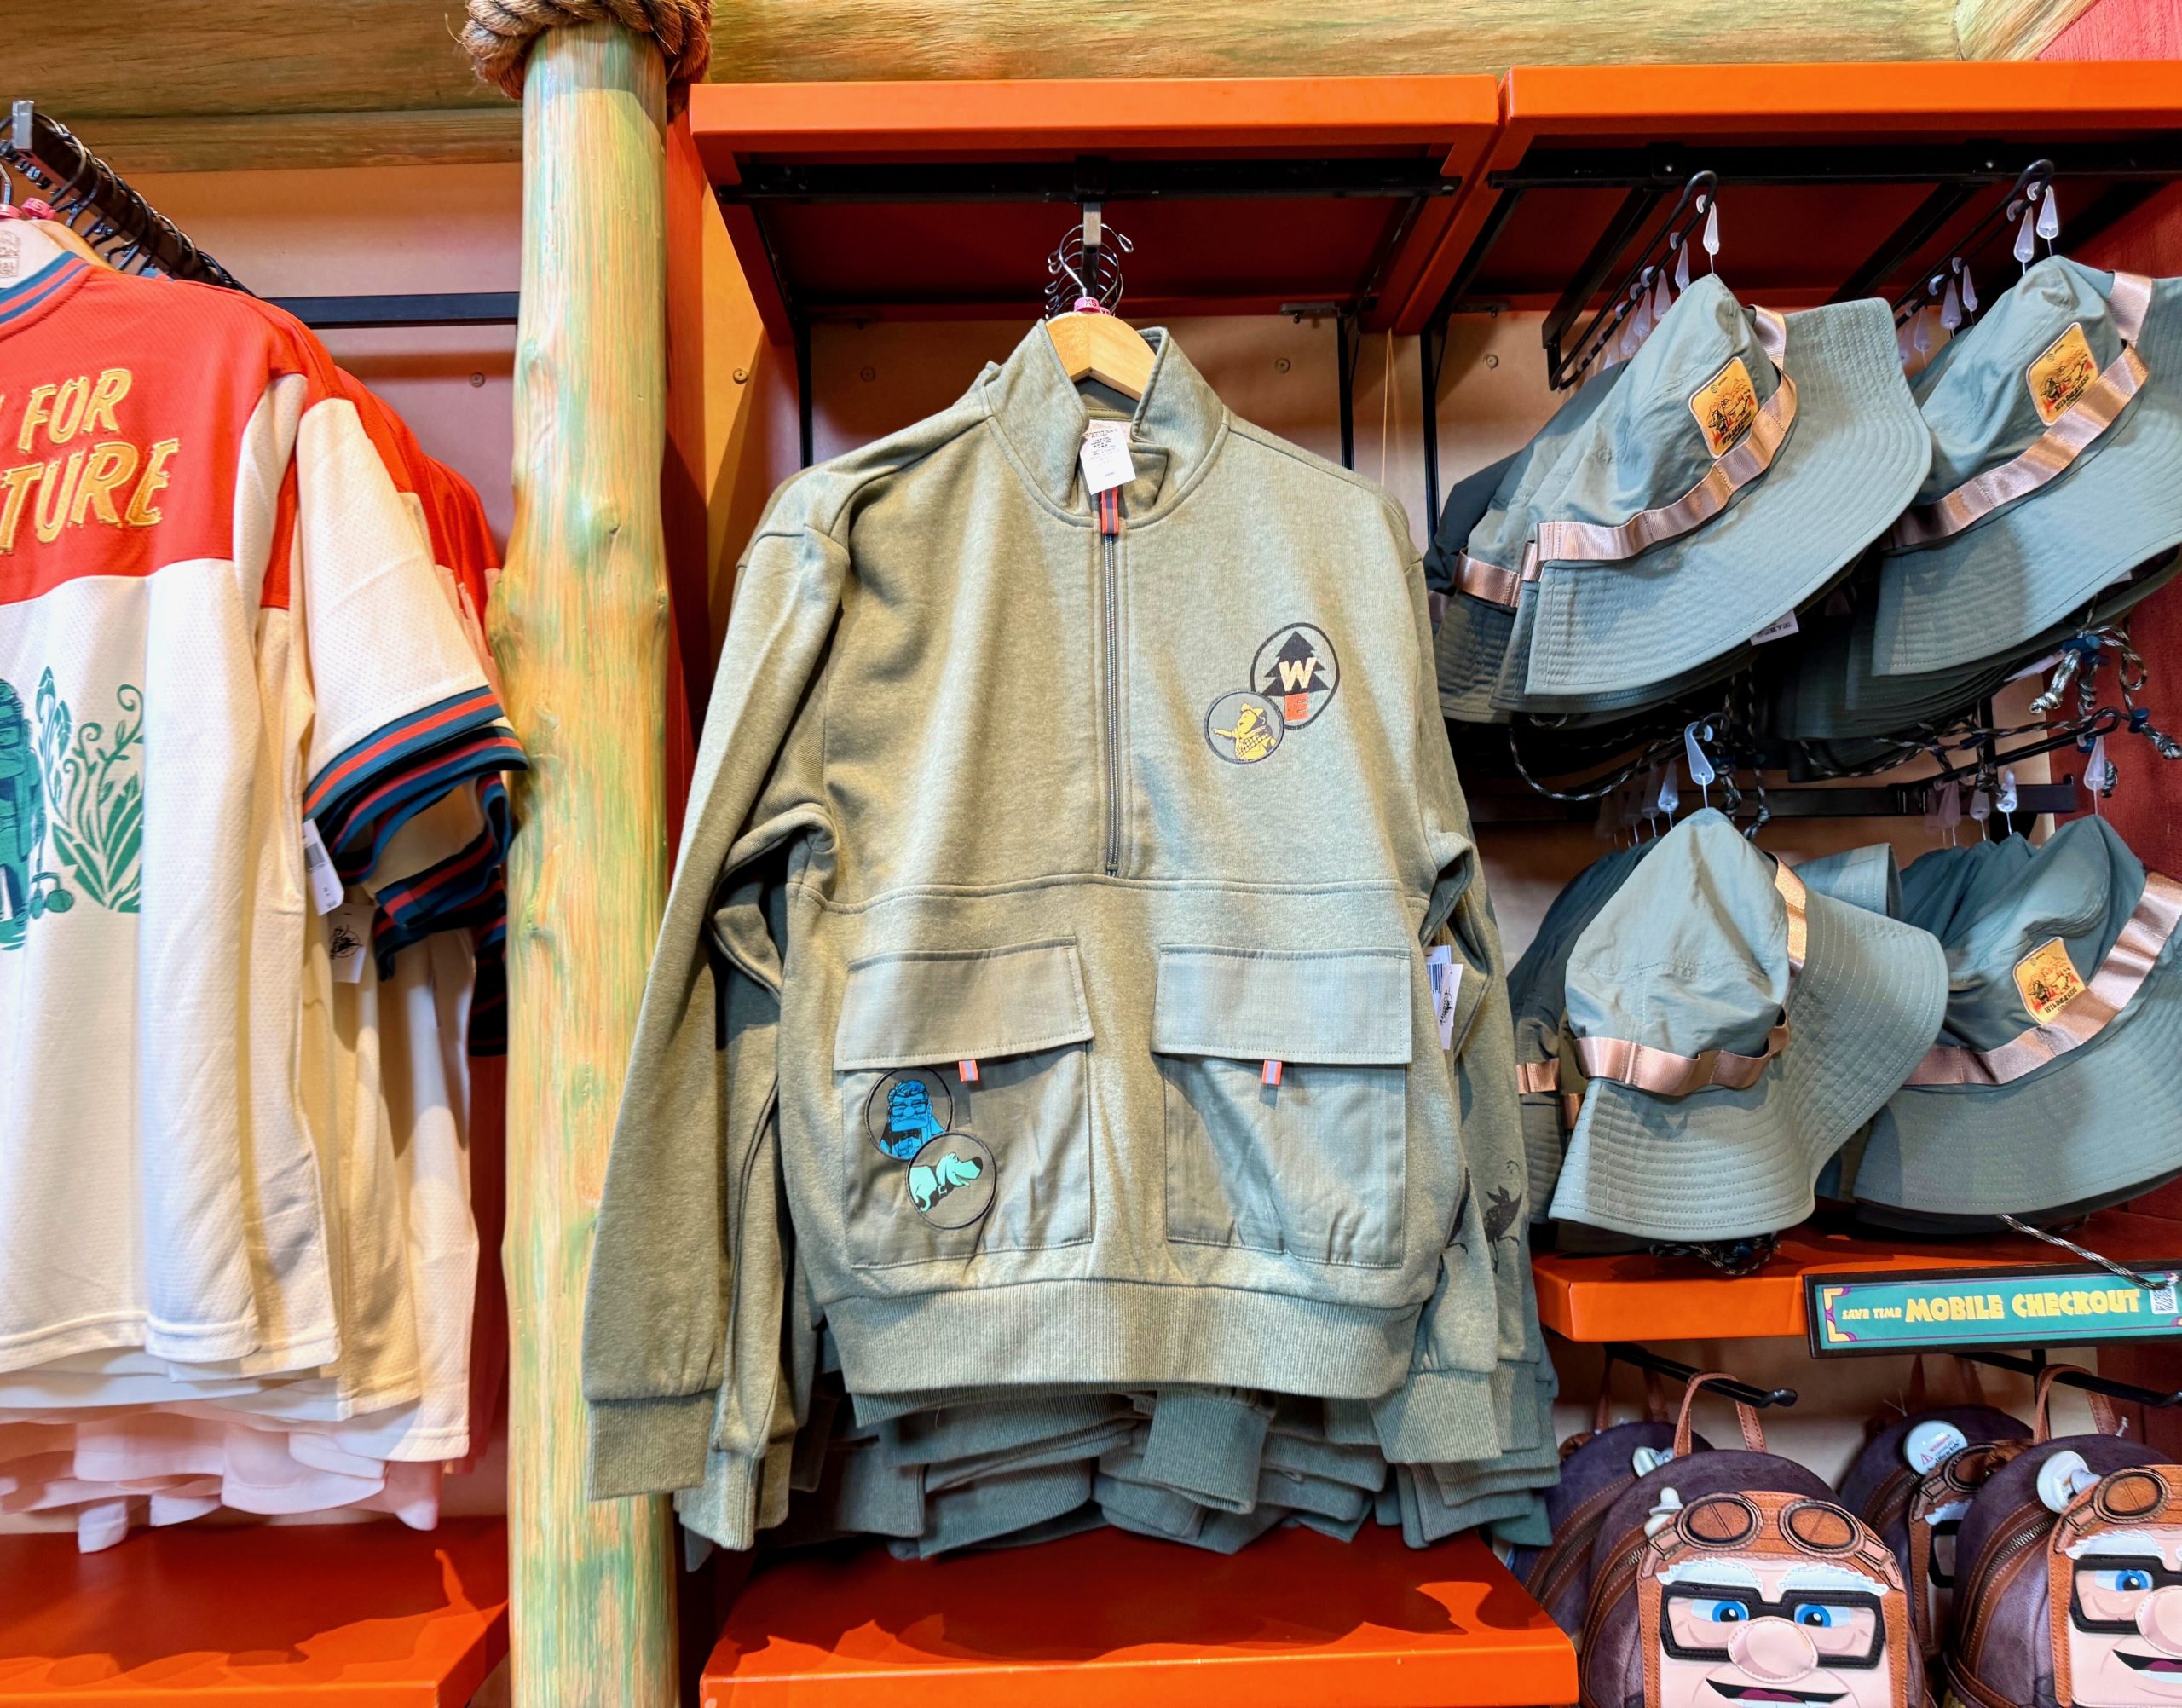 'UP' Merchandise at Disney's Animal Kingdom